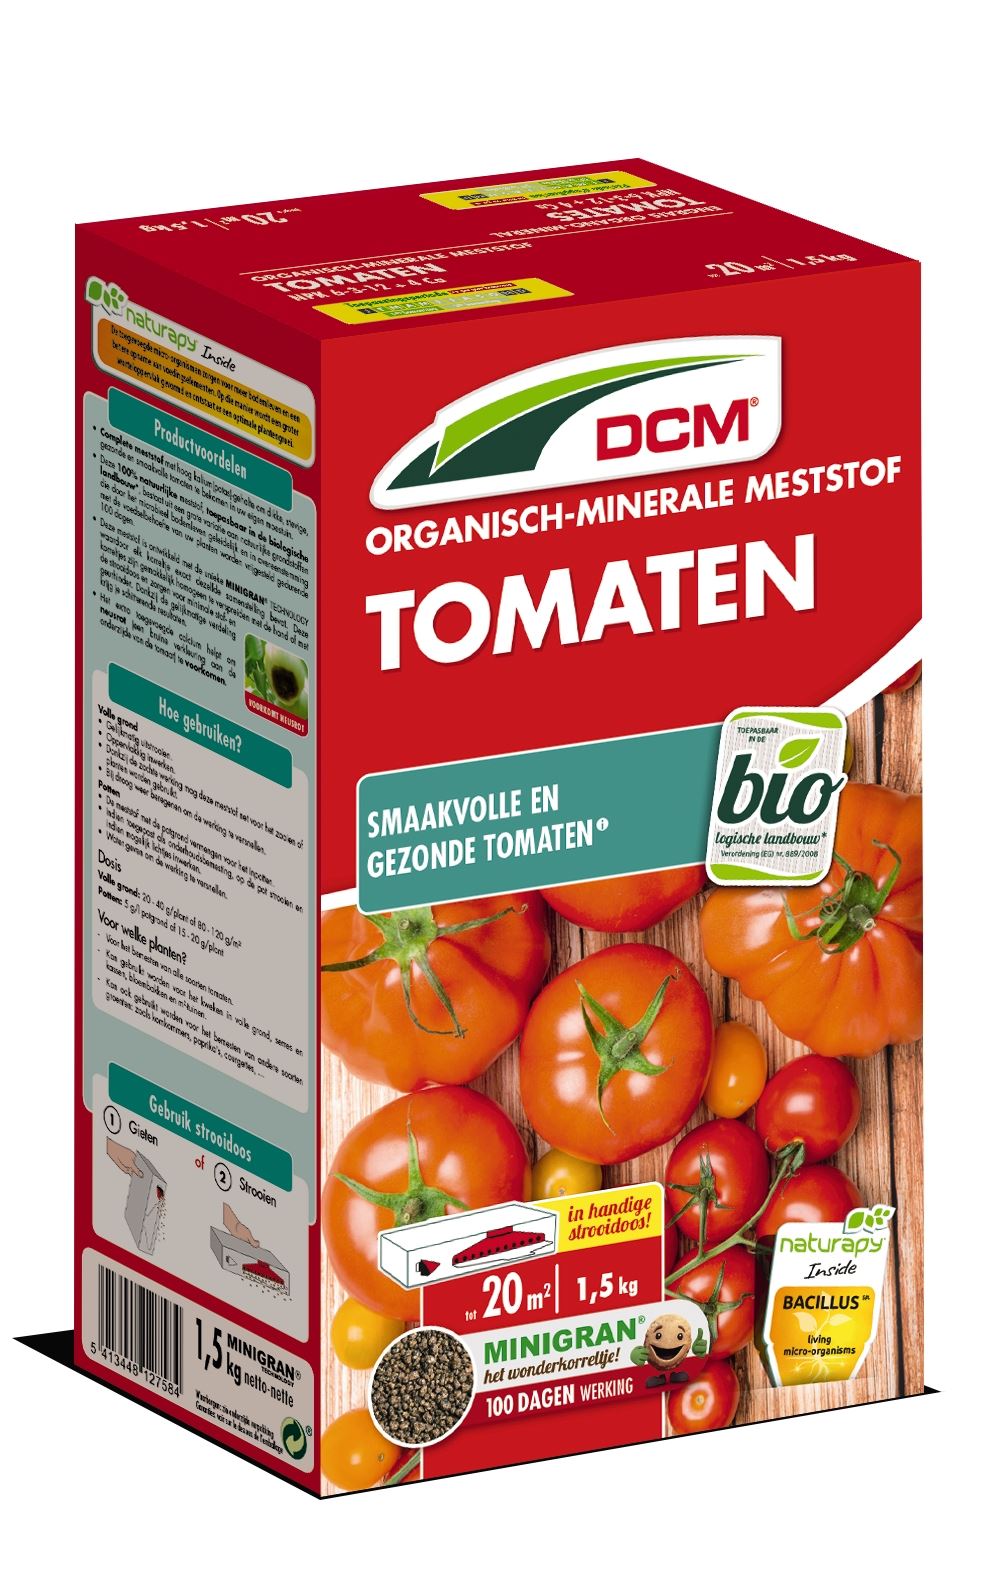 Meststof-tomaten-1-5kg-Bio-NPK-6-3-12-4Ca-Bacillus-sp-